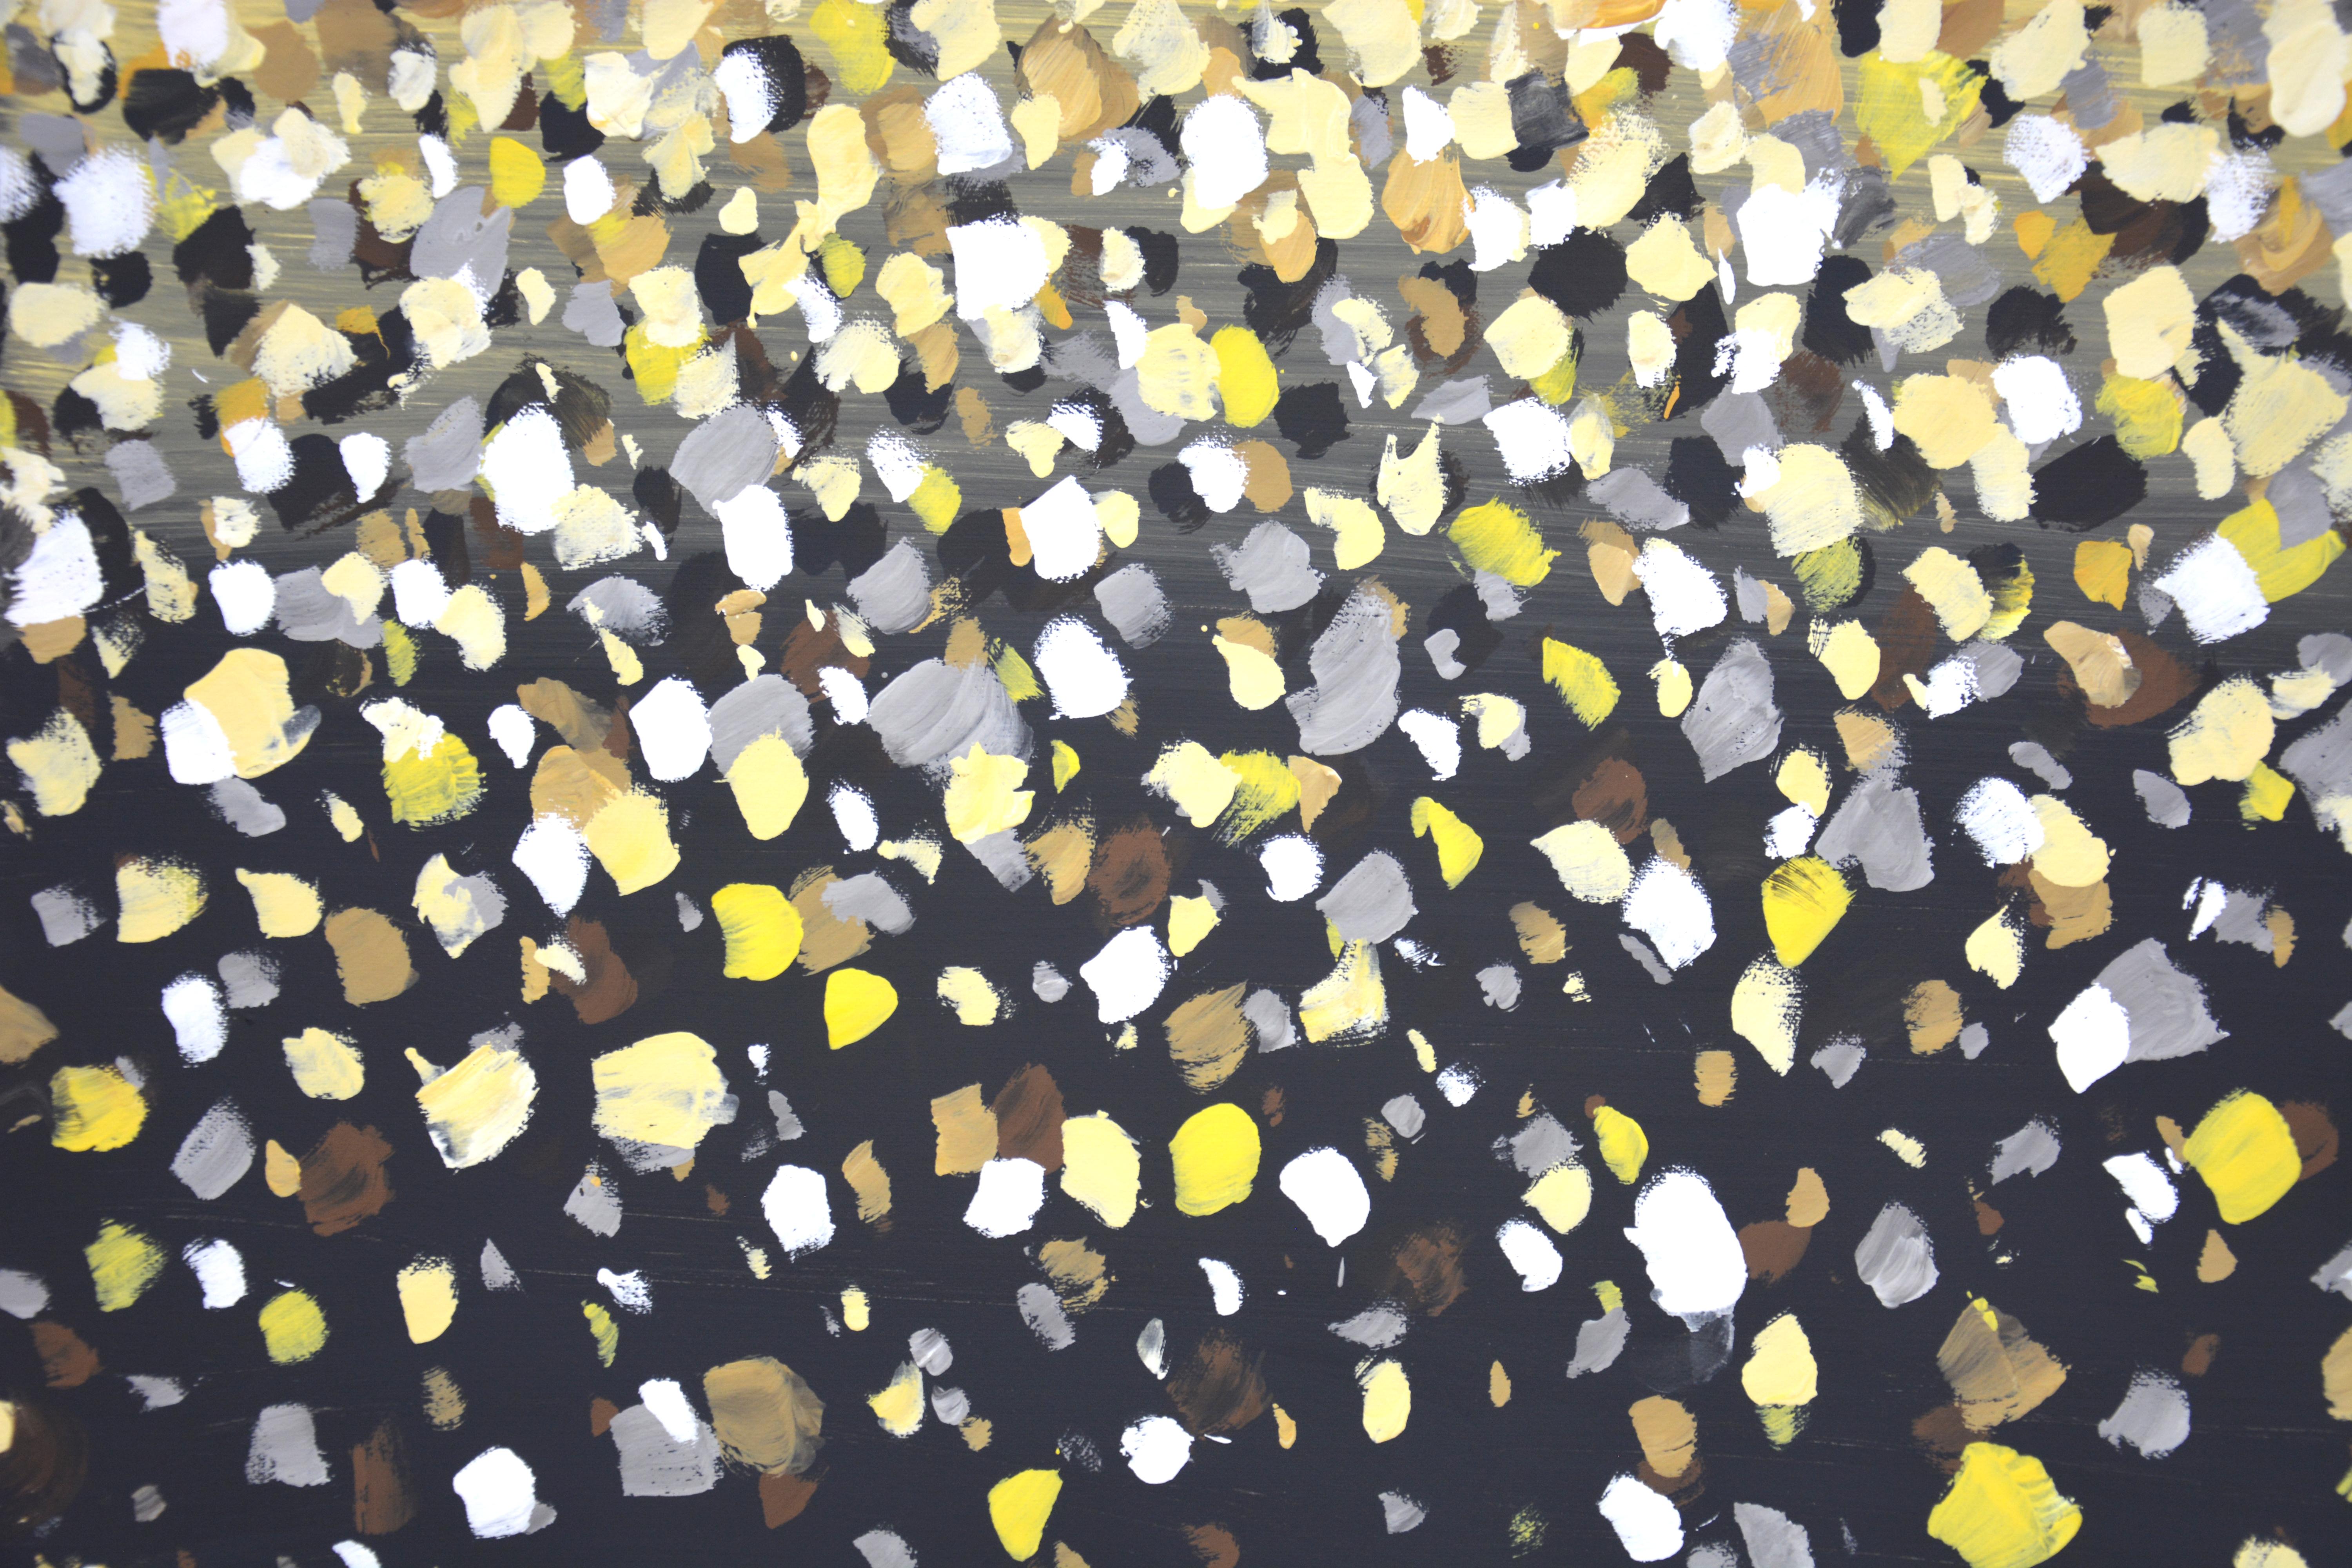 Poantillism. Glare. Interior Painting Modern Design with Black Gold Yellow Dots 5